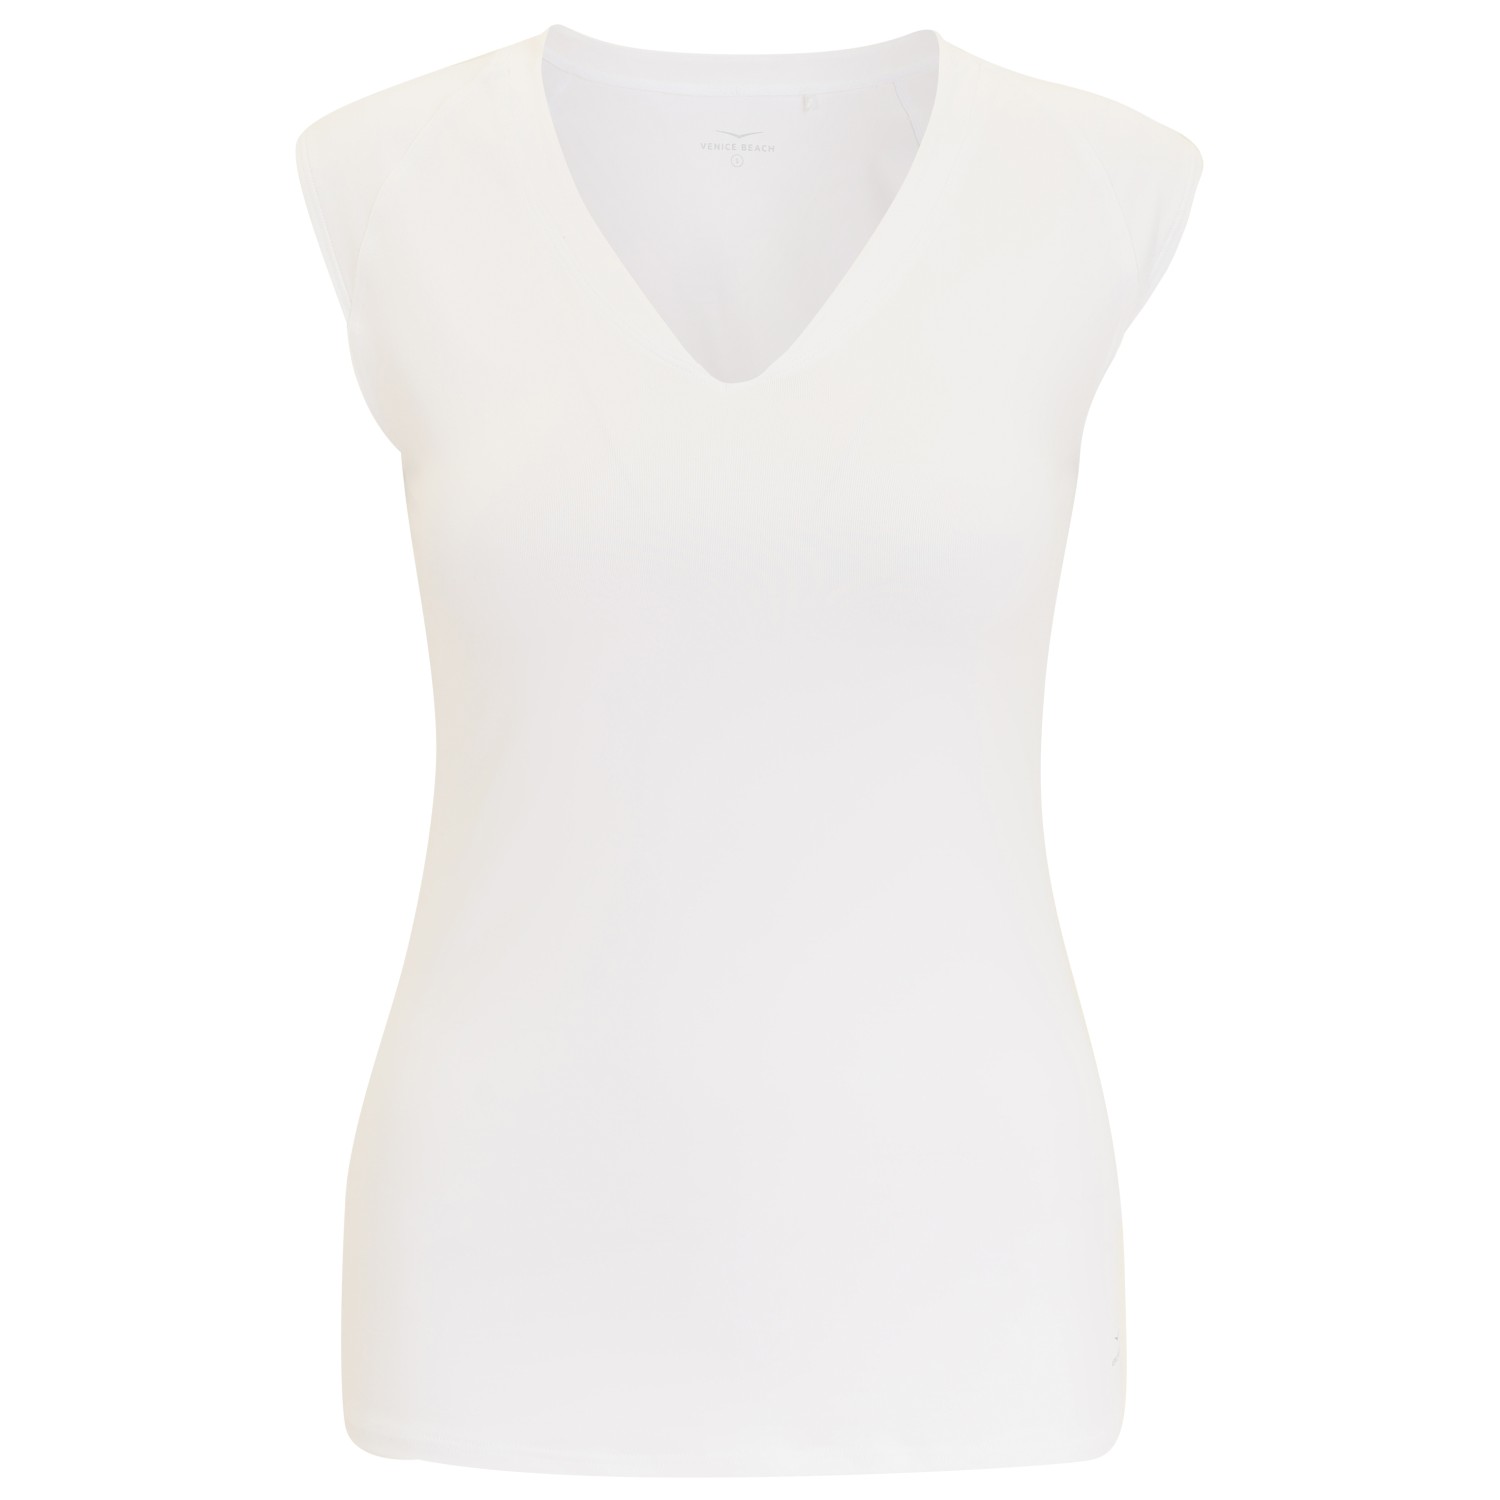 Функциональная рубашка Venice Beach Women's Eleam Drytivity T Shirt, белый